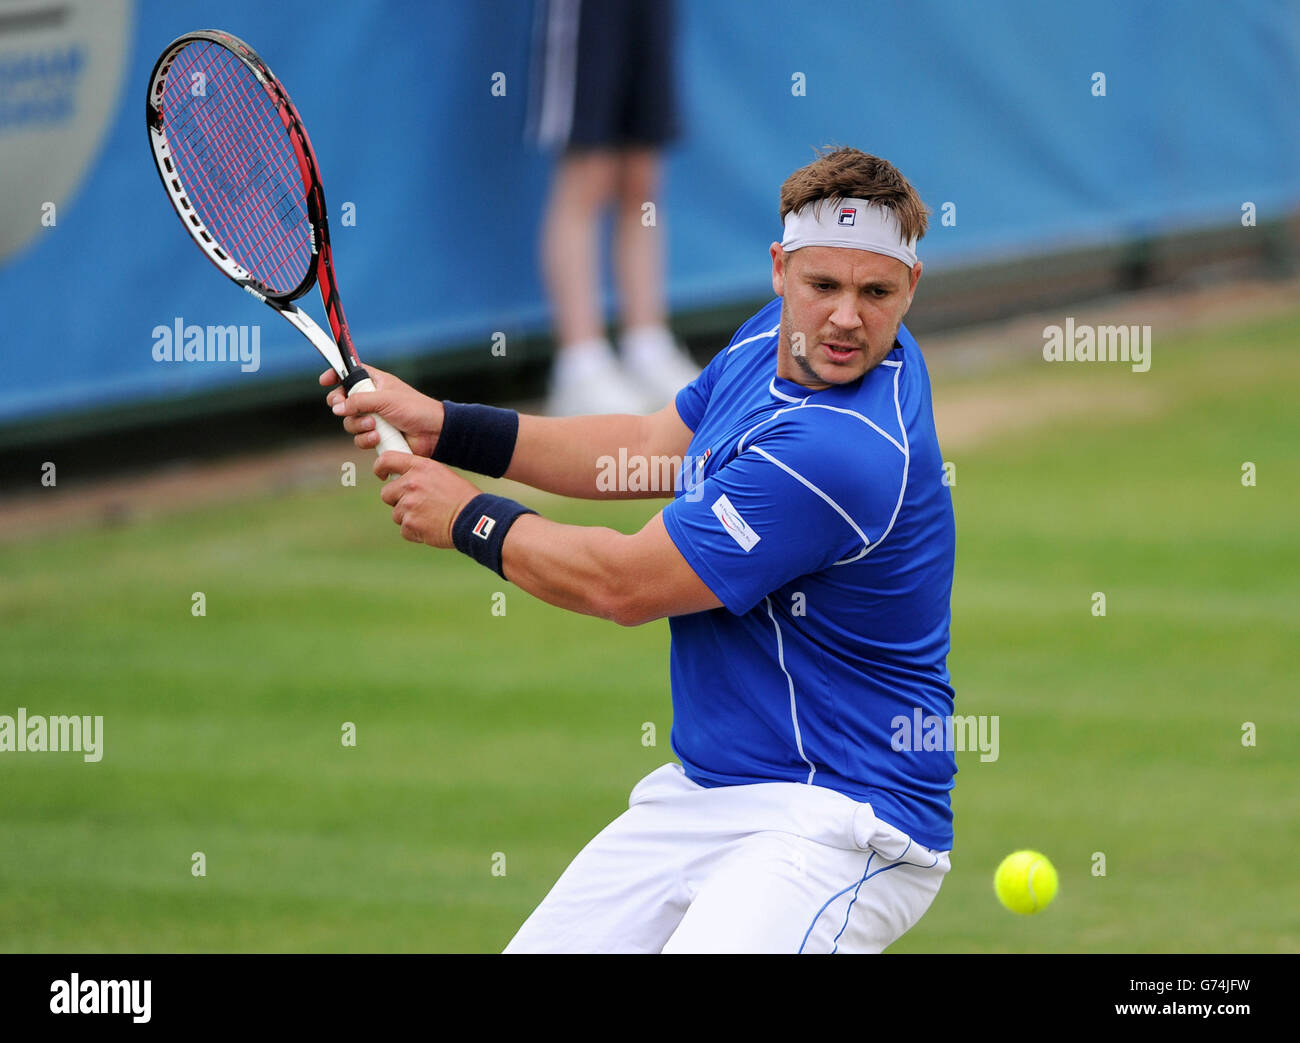 Great Britain's Marcus Willis in action against Romania's Marius Copil during the AEGON Nottingham Challenge at The Nottingham Tennis Centre, Nottingham. Stock Photo